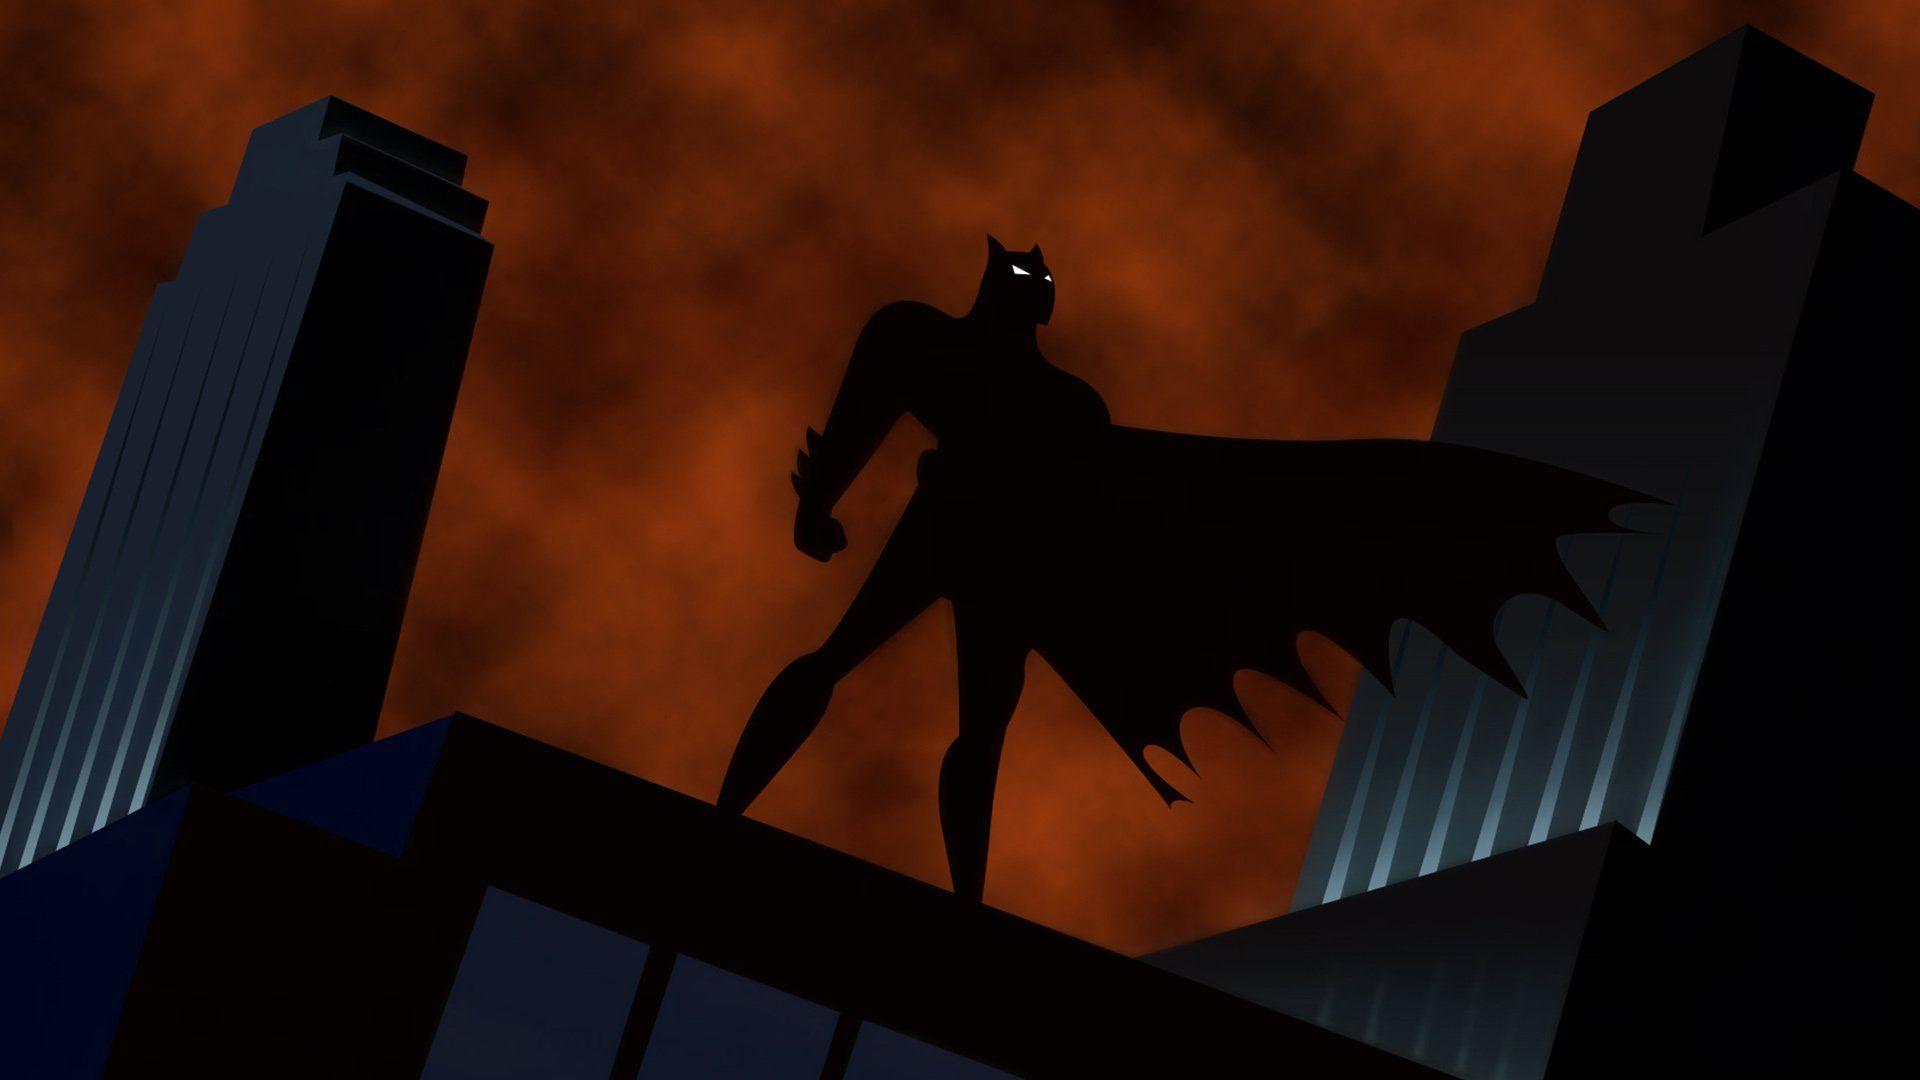 Batman: The Animated Series HD Wallpaper